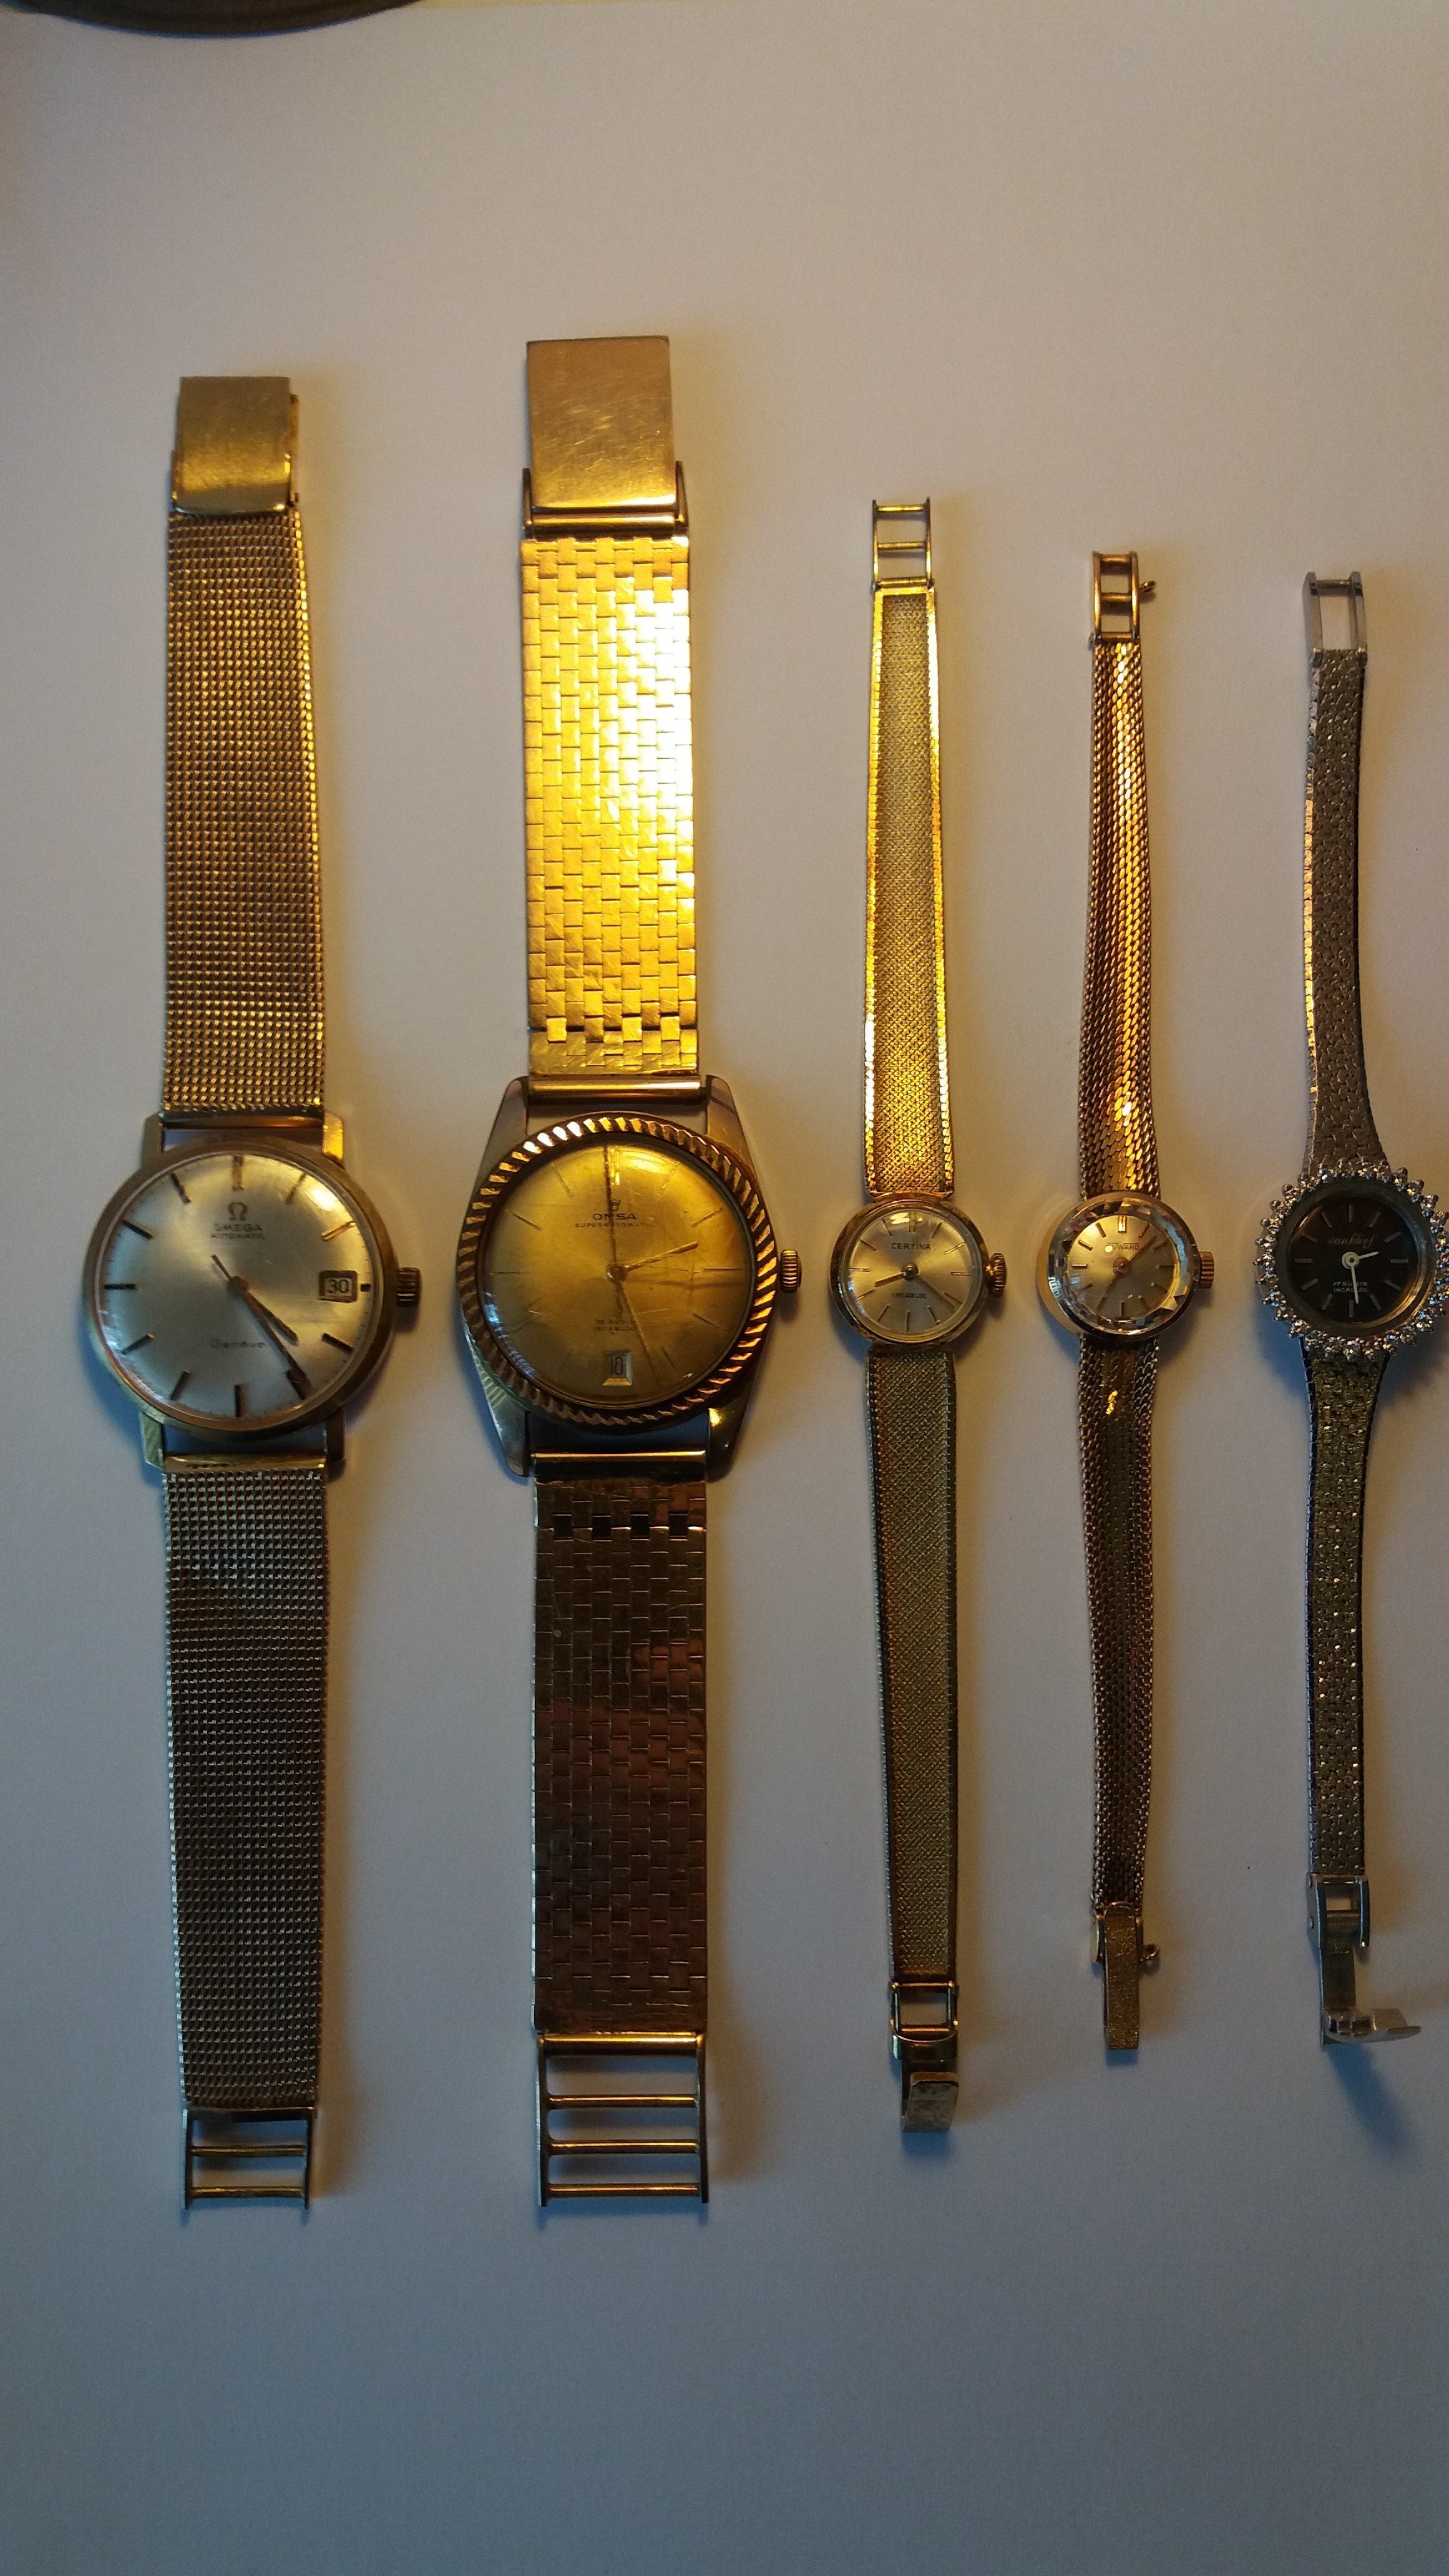 Horloges van en Oma Vintage Horlogeforum - Horlogeforum.nl - het forum voor liefhebbers van horloges